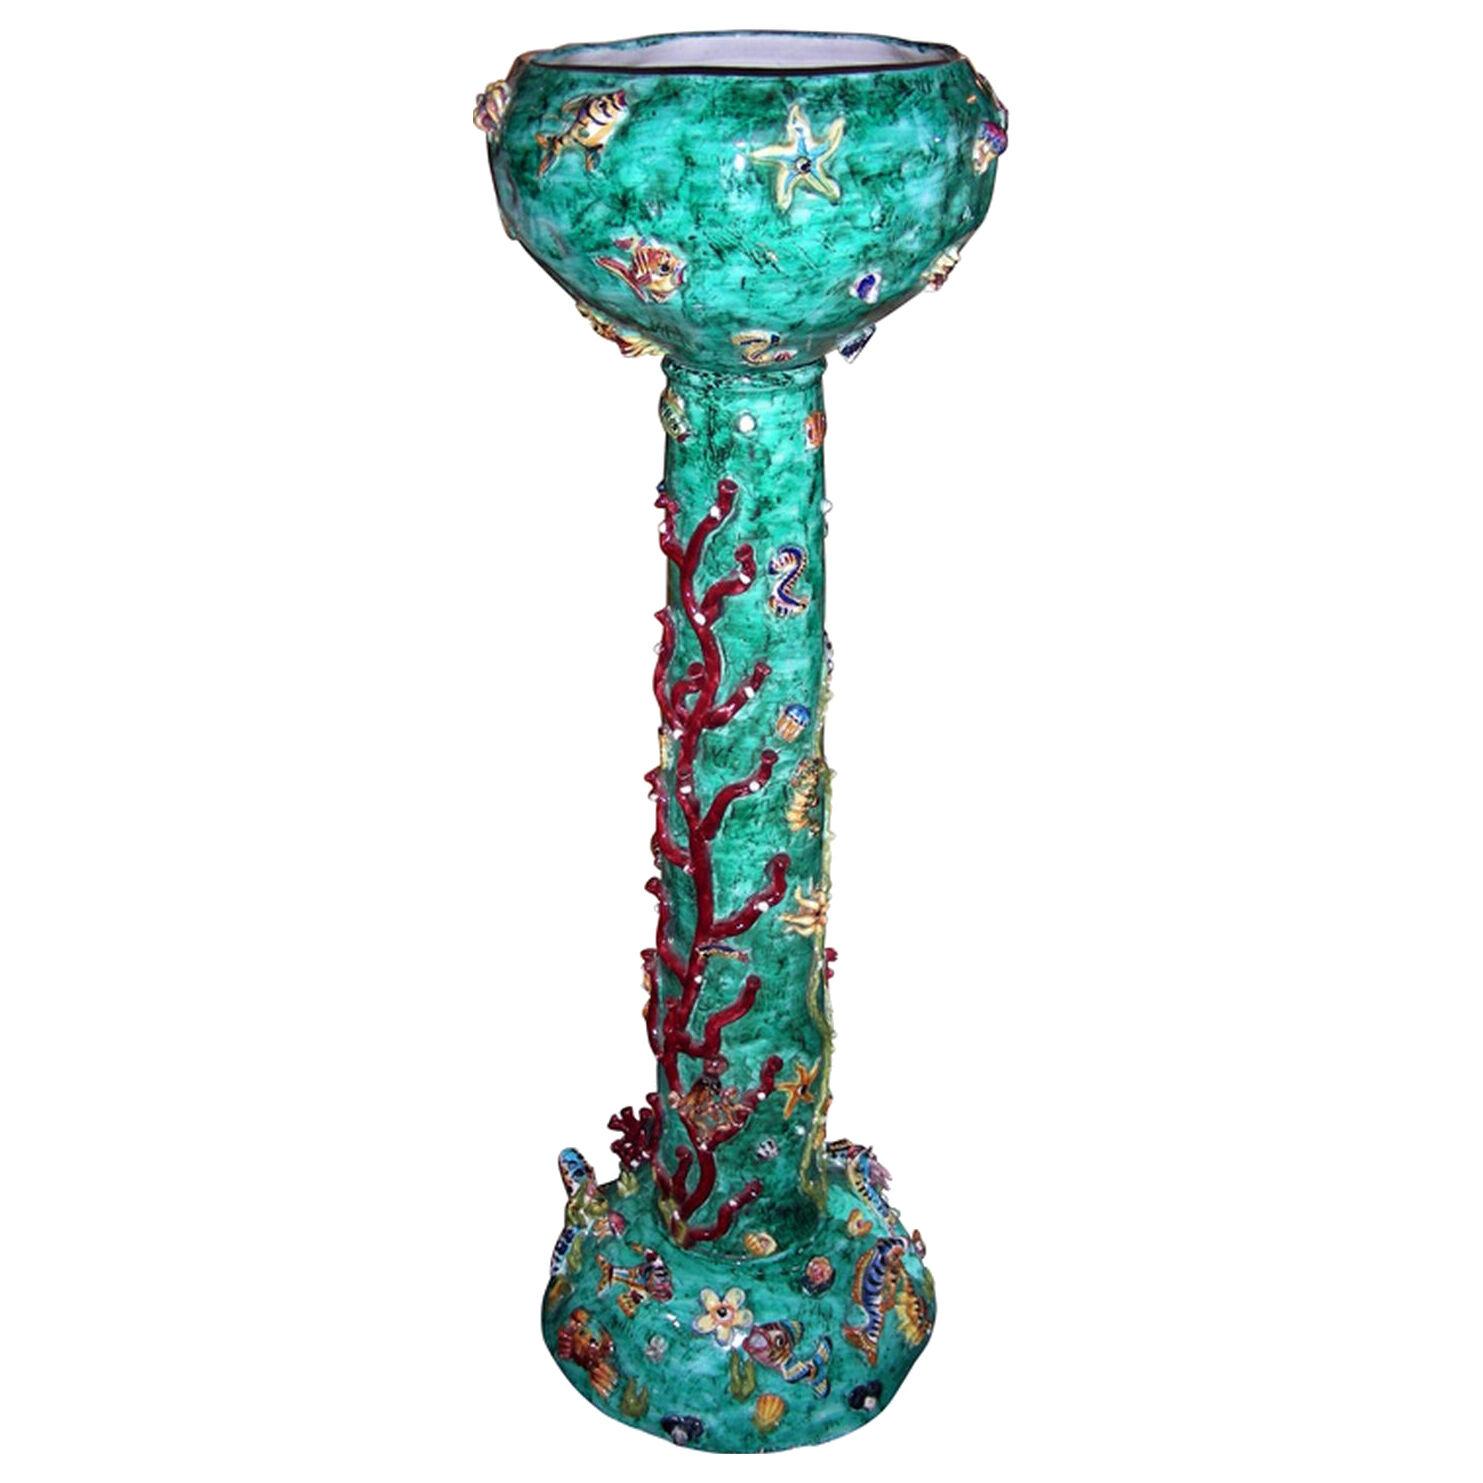 Glazed ceramic basin on column with aquatic decoration, Vietri Sul Mare